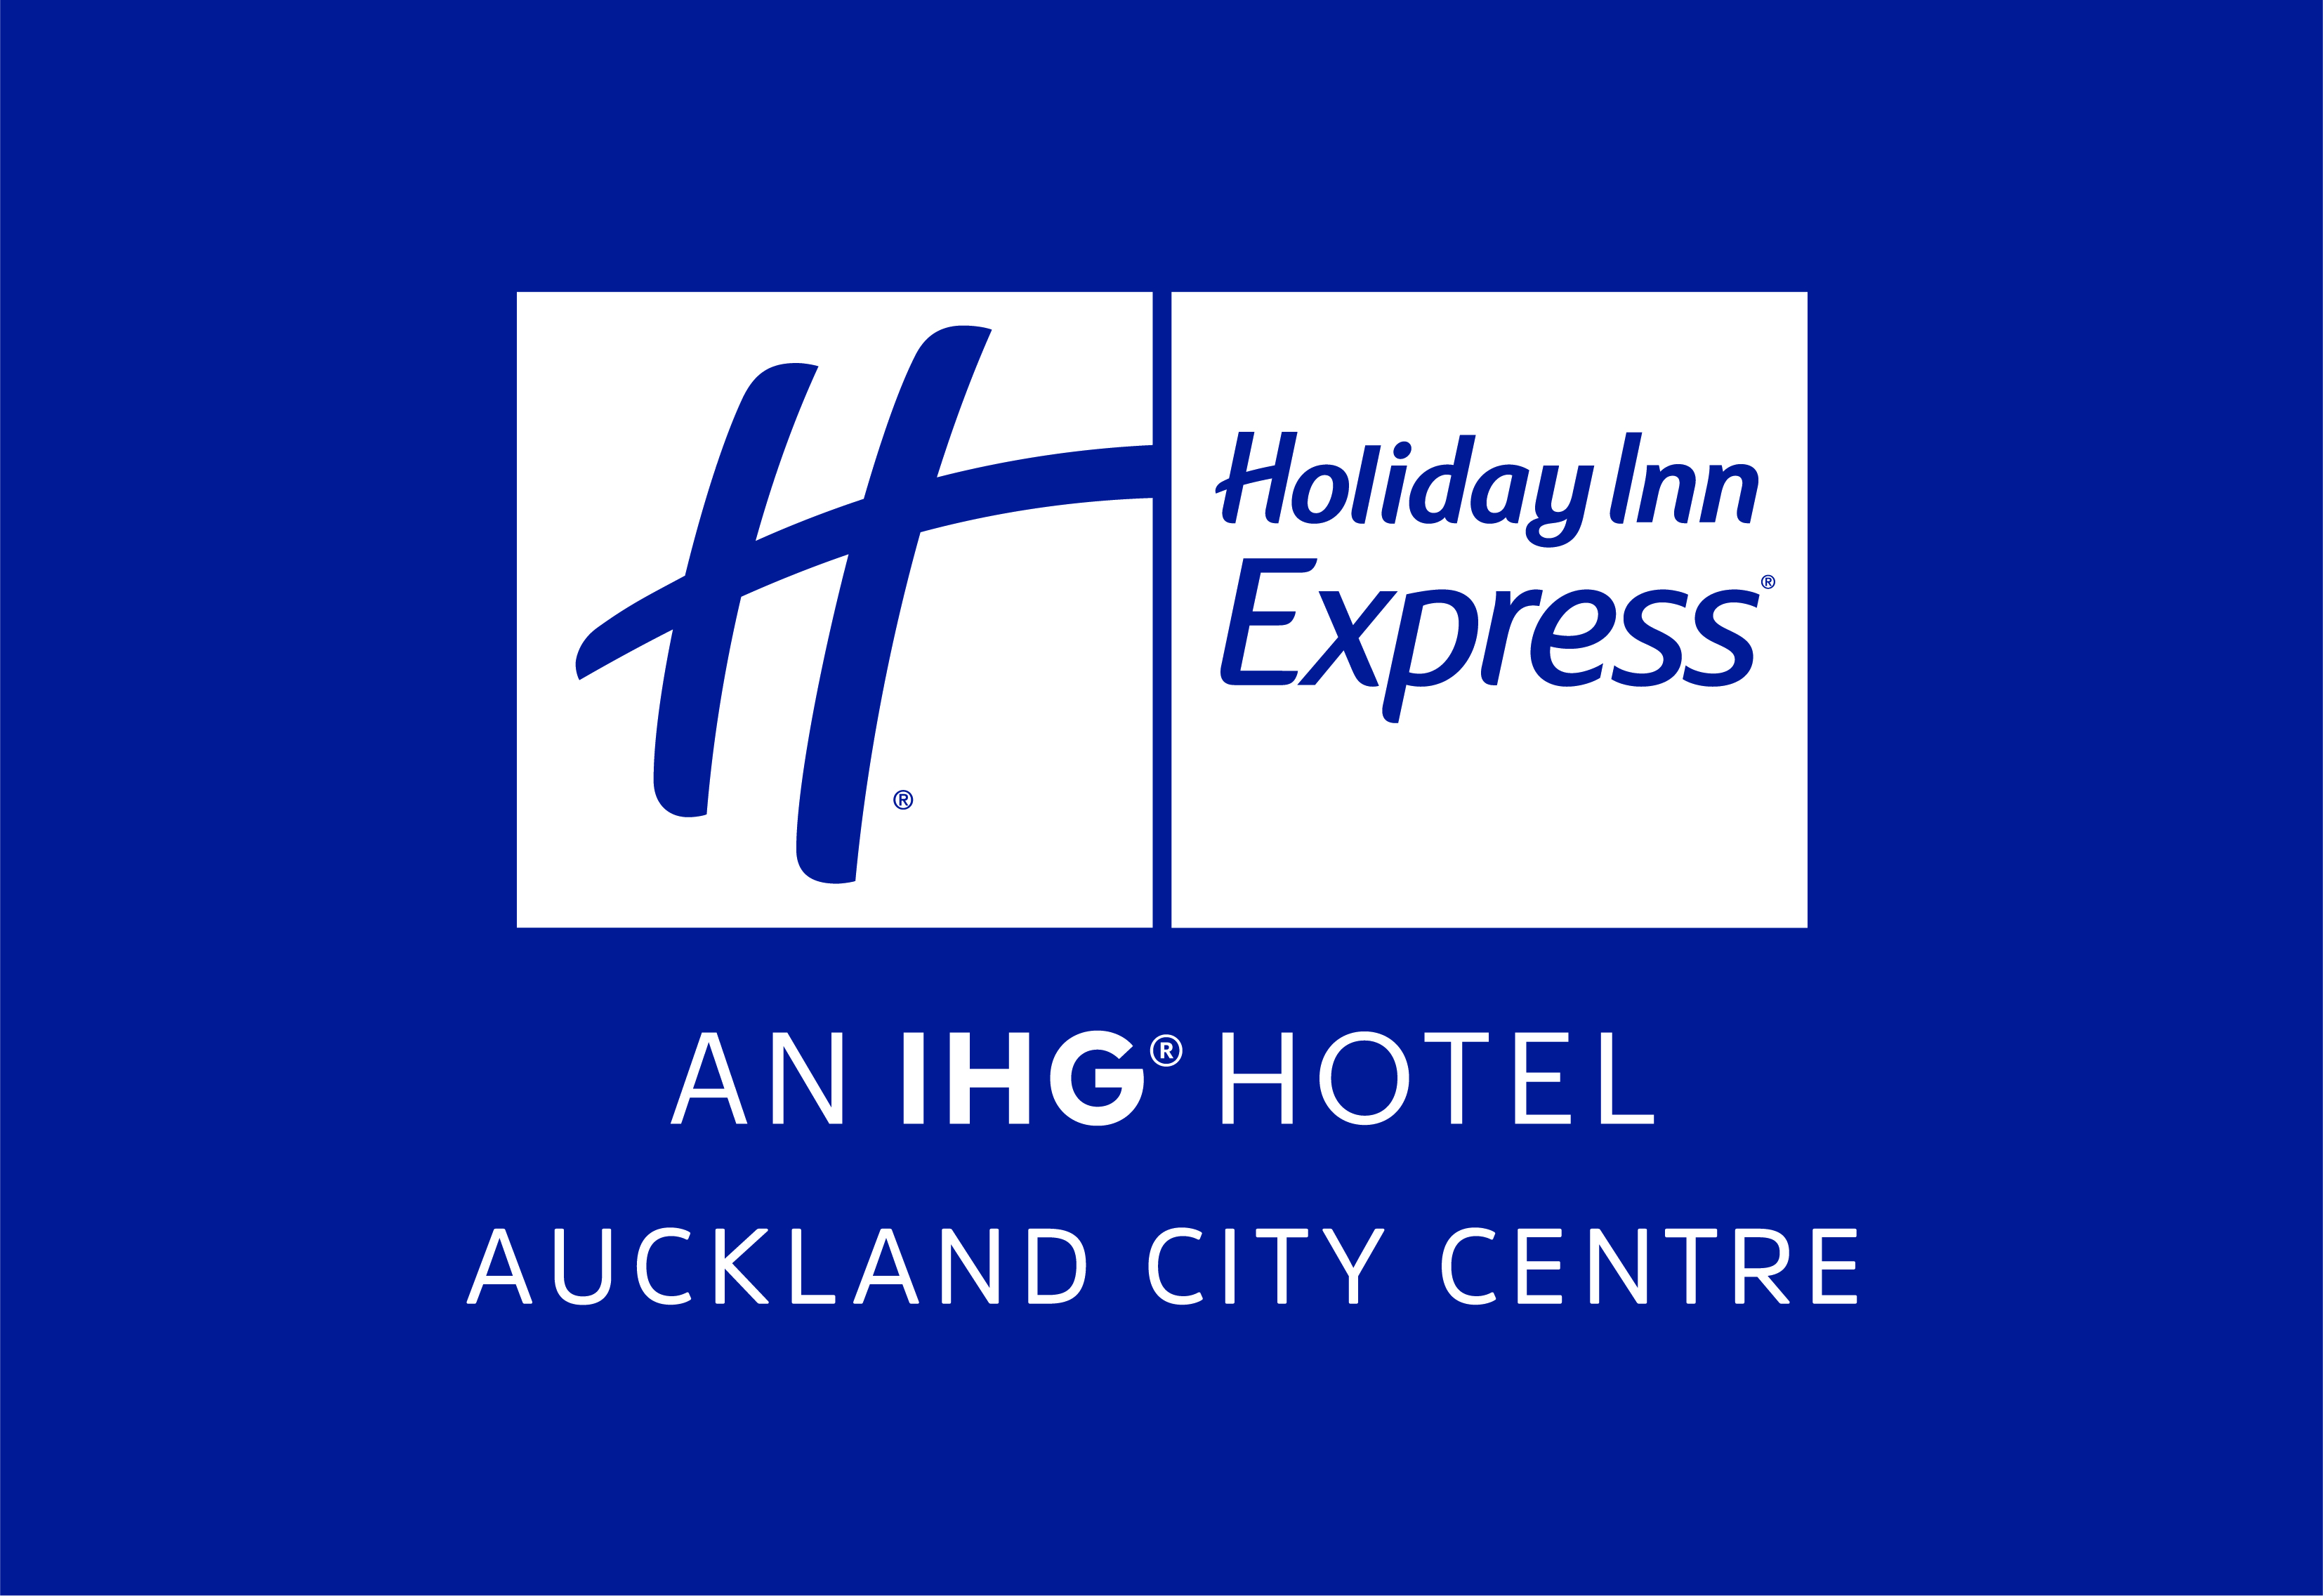 
Holiday Inn Express Auckland City Centre